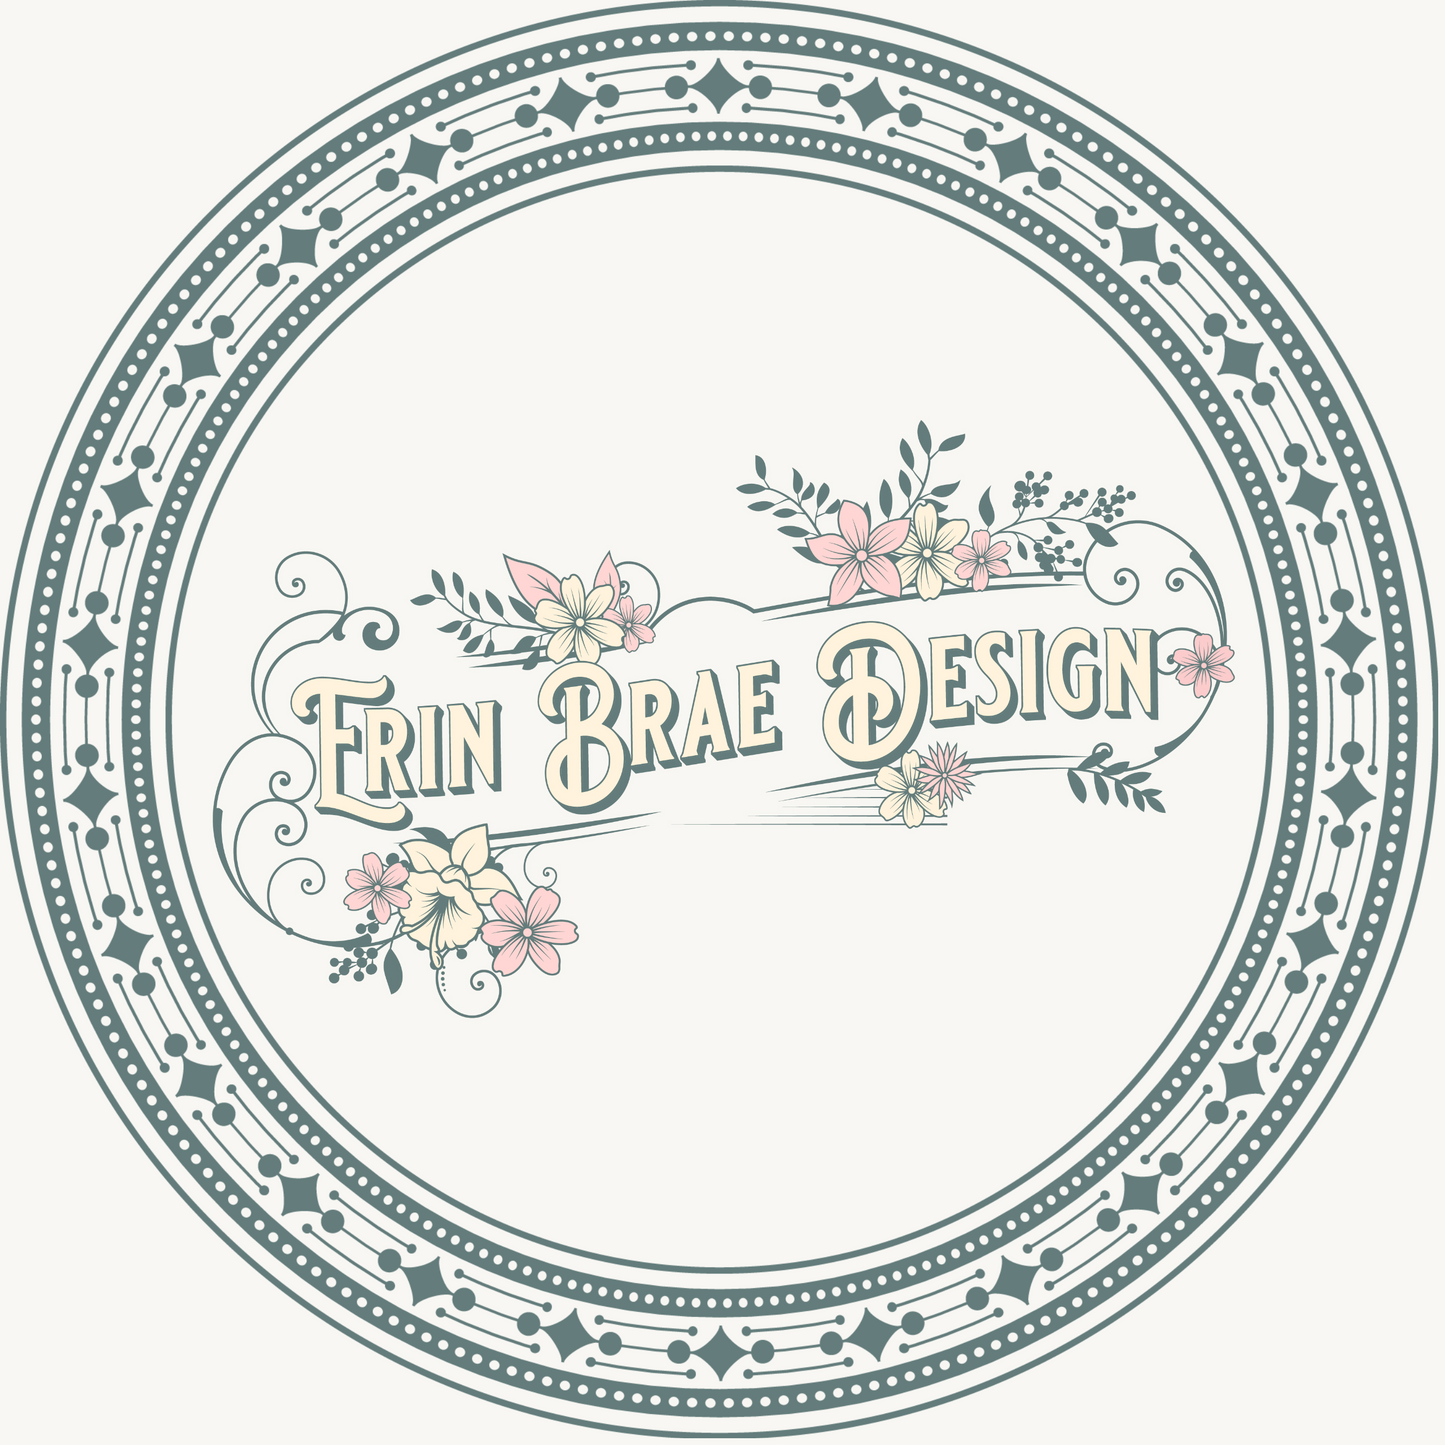 Erin Brae Design Gift Cards